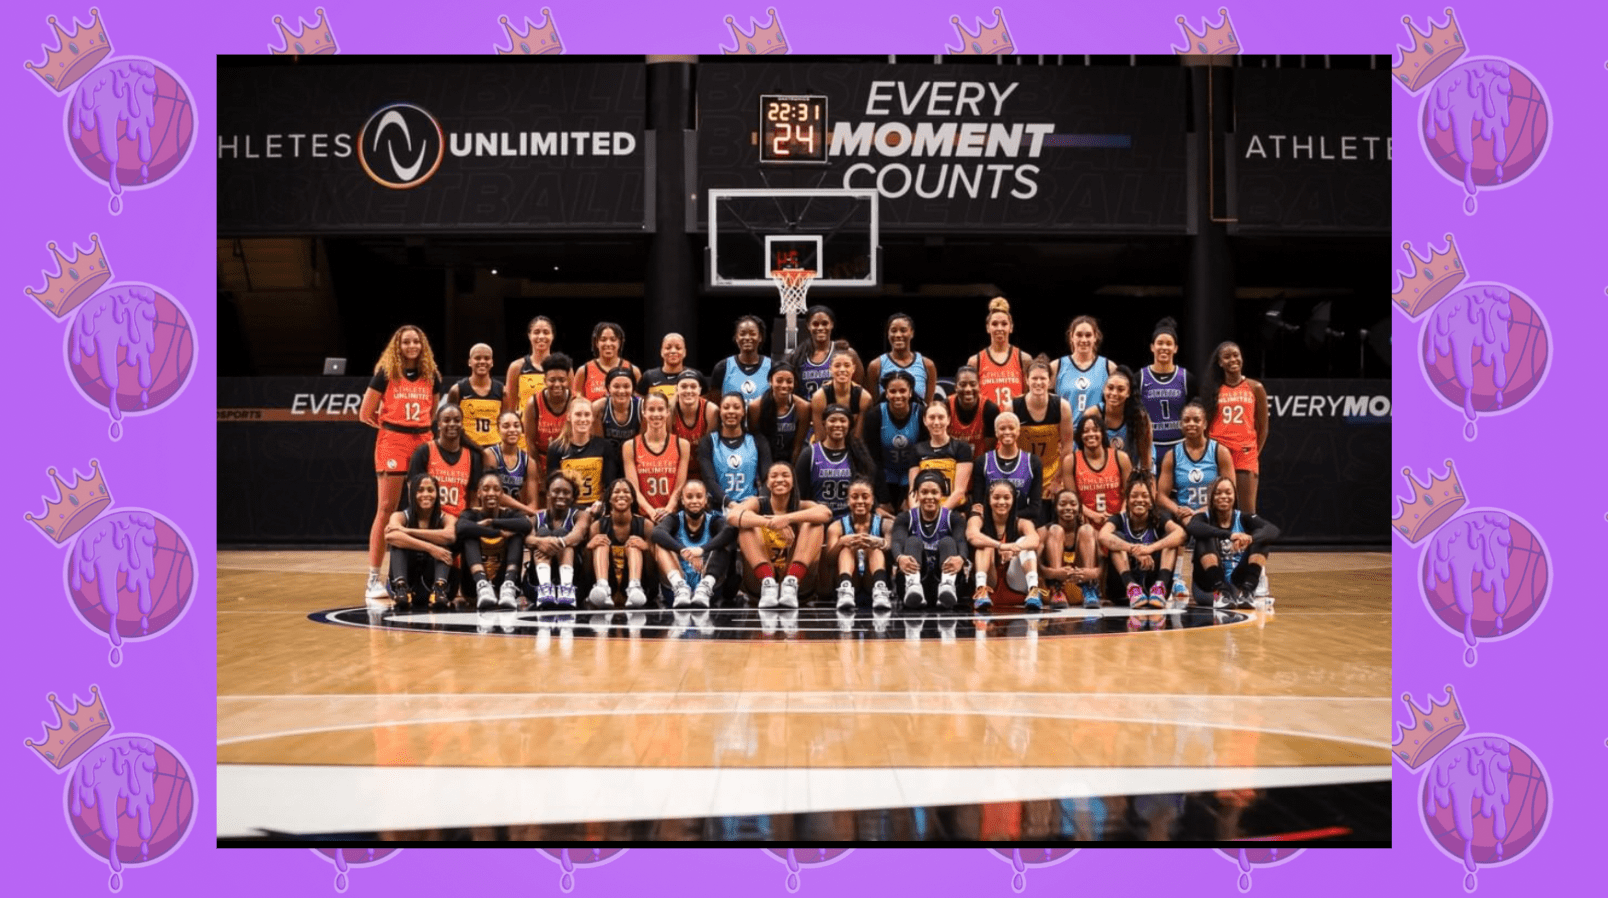 Athletes Unlimited kicks off new pro women's basketball league